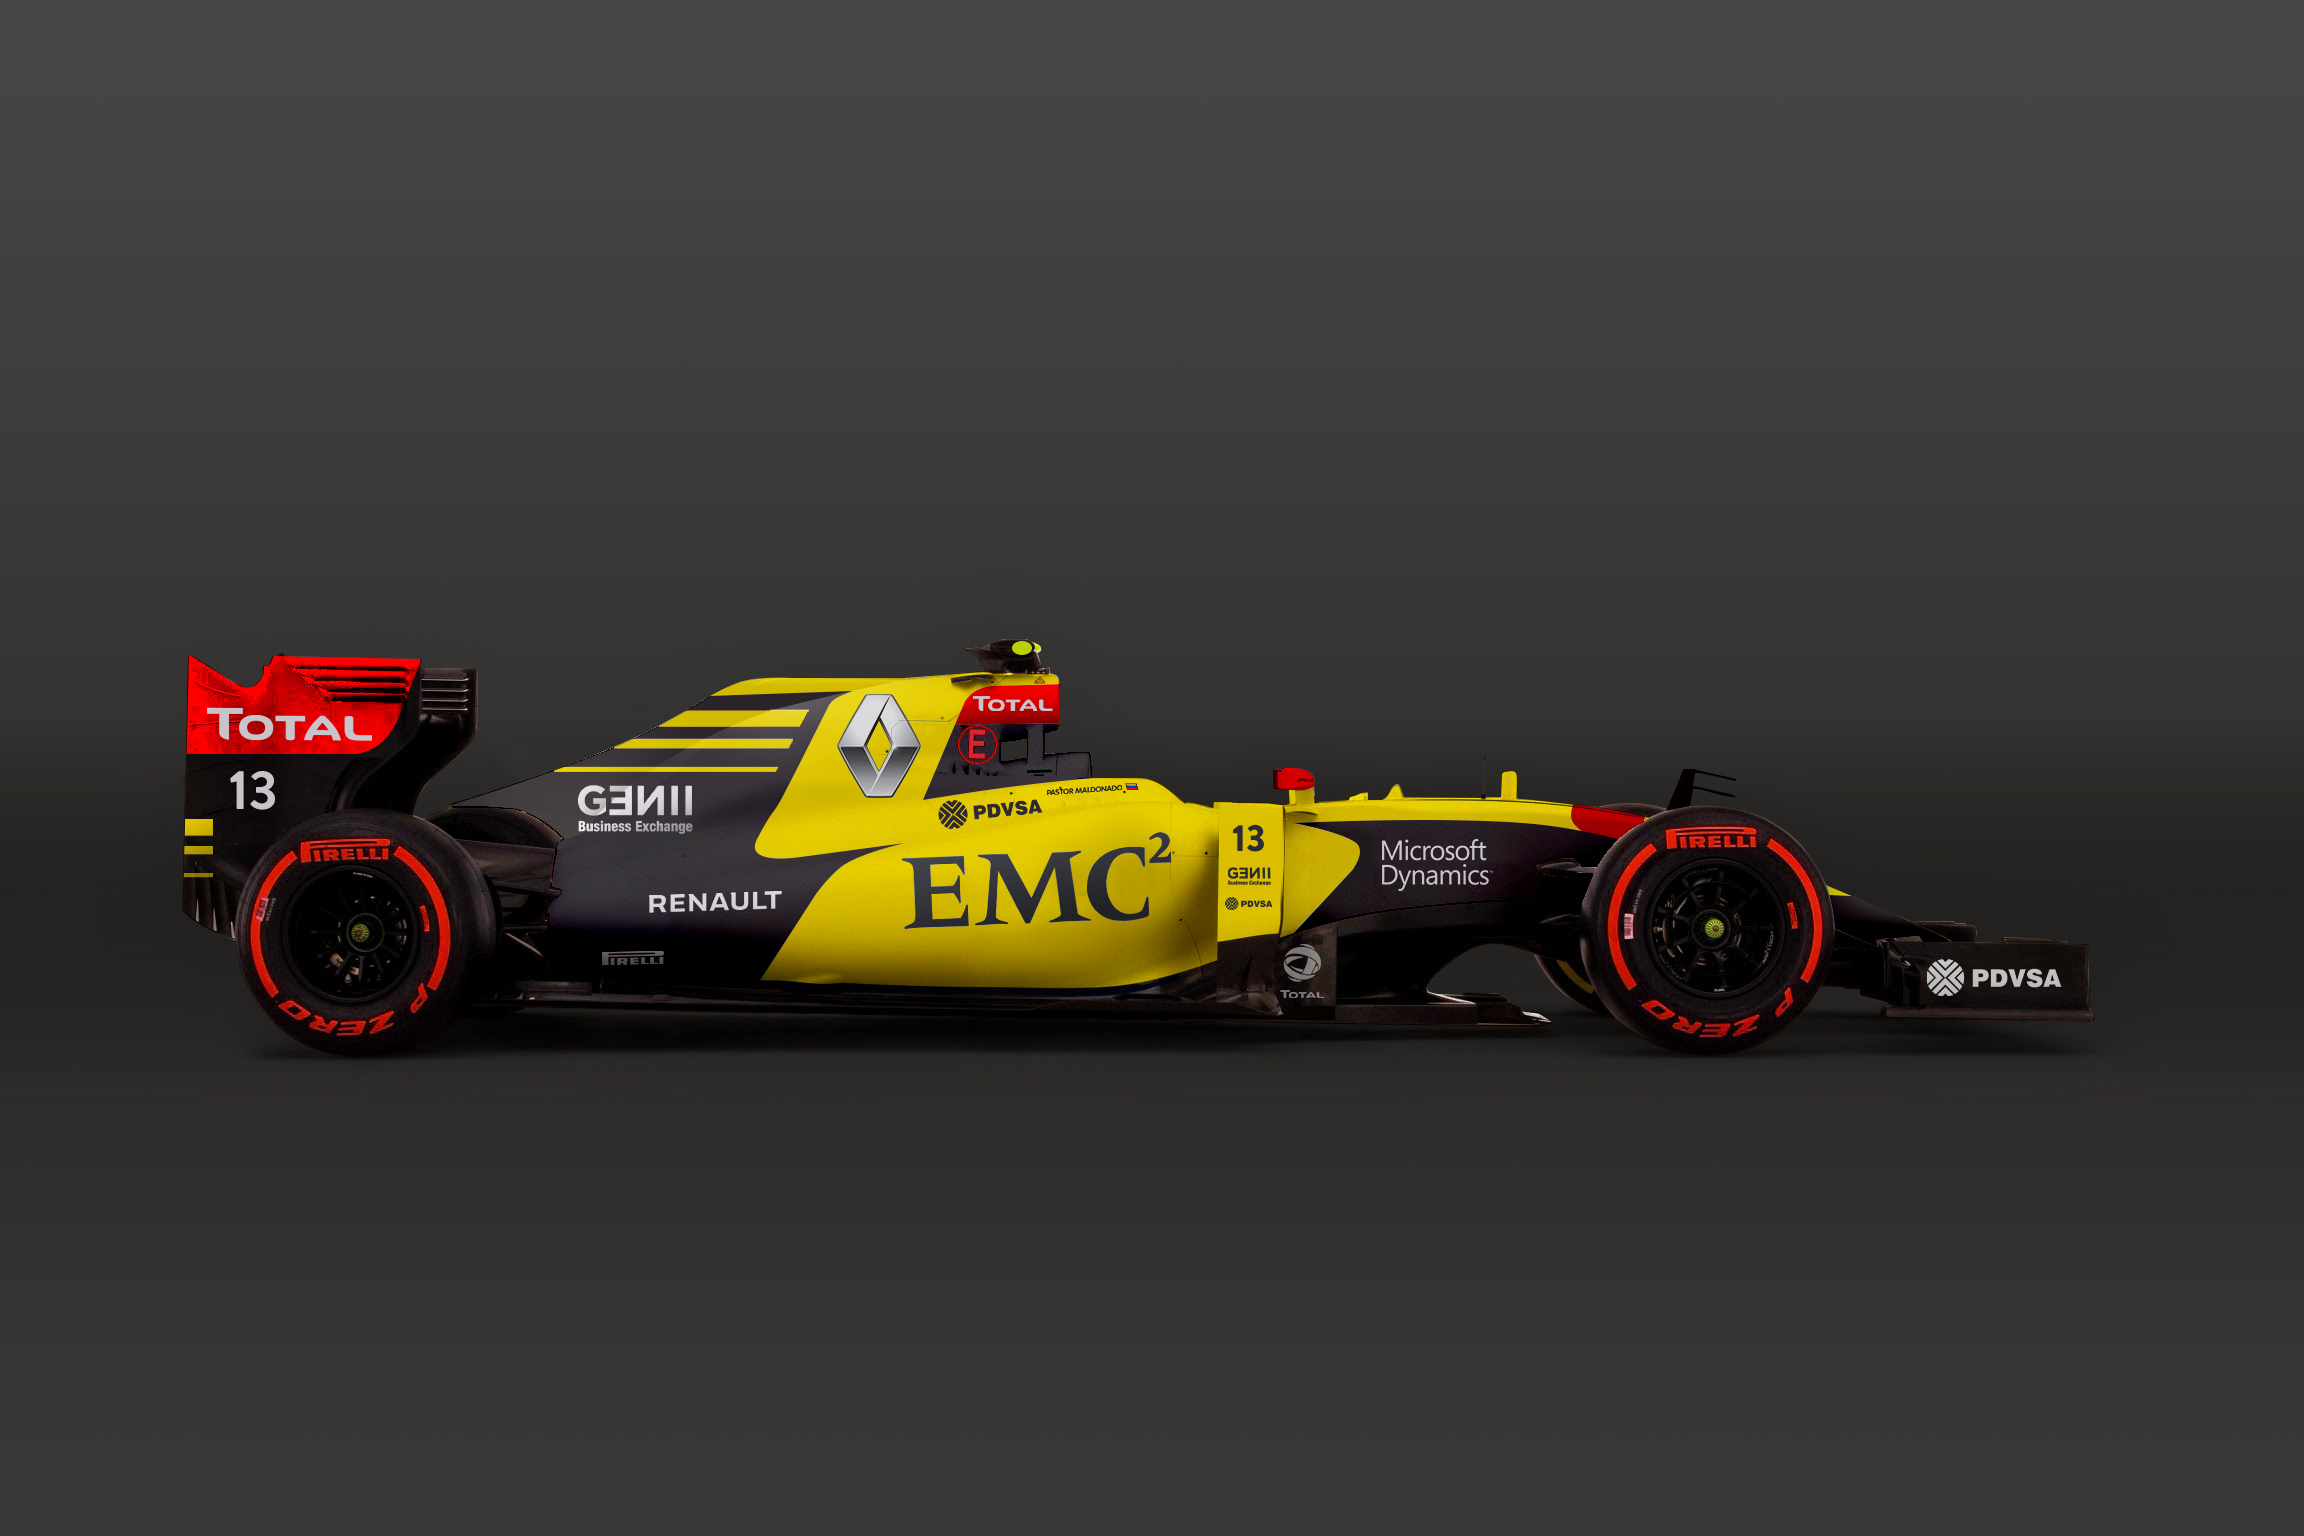 2016 Renault F1 // Fictional